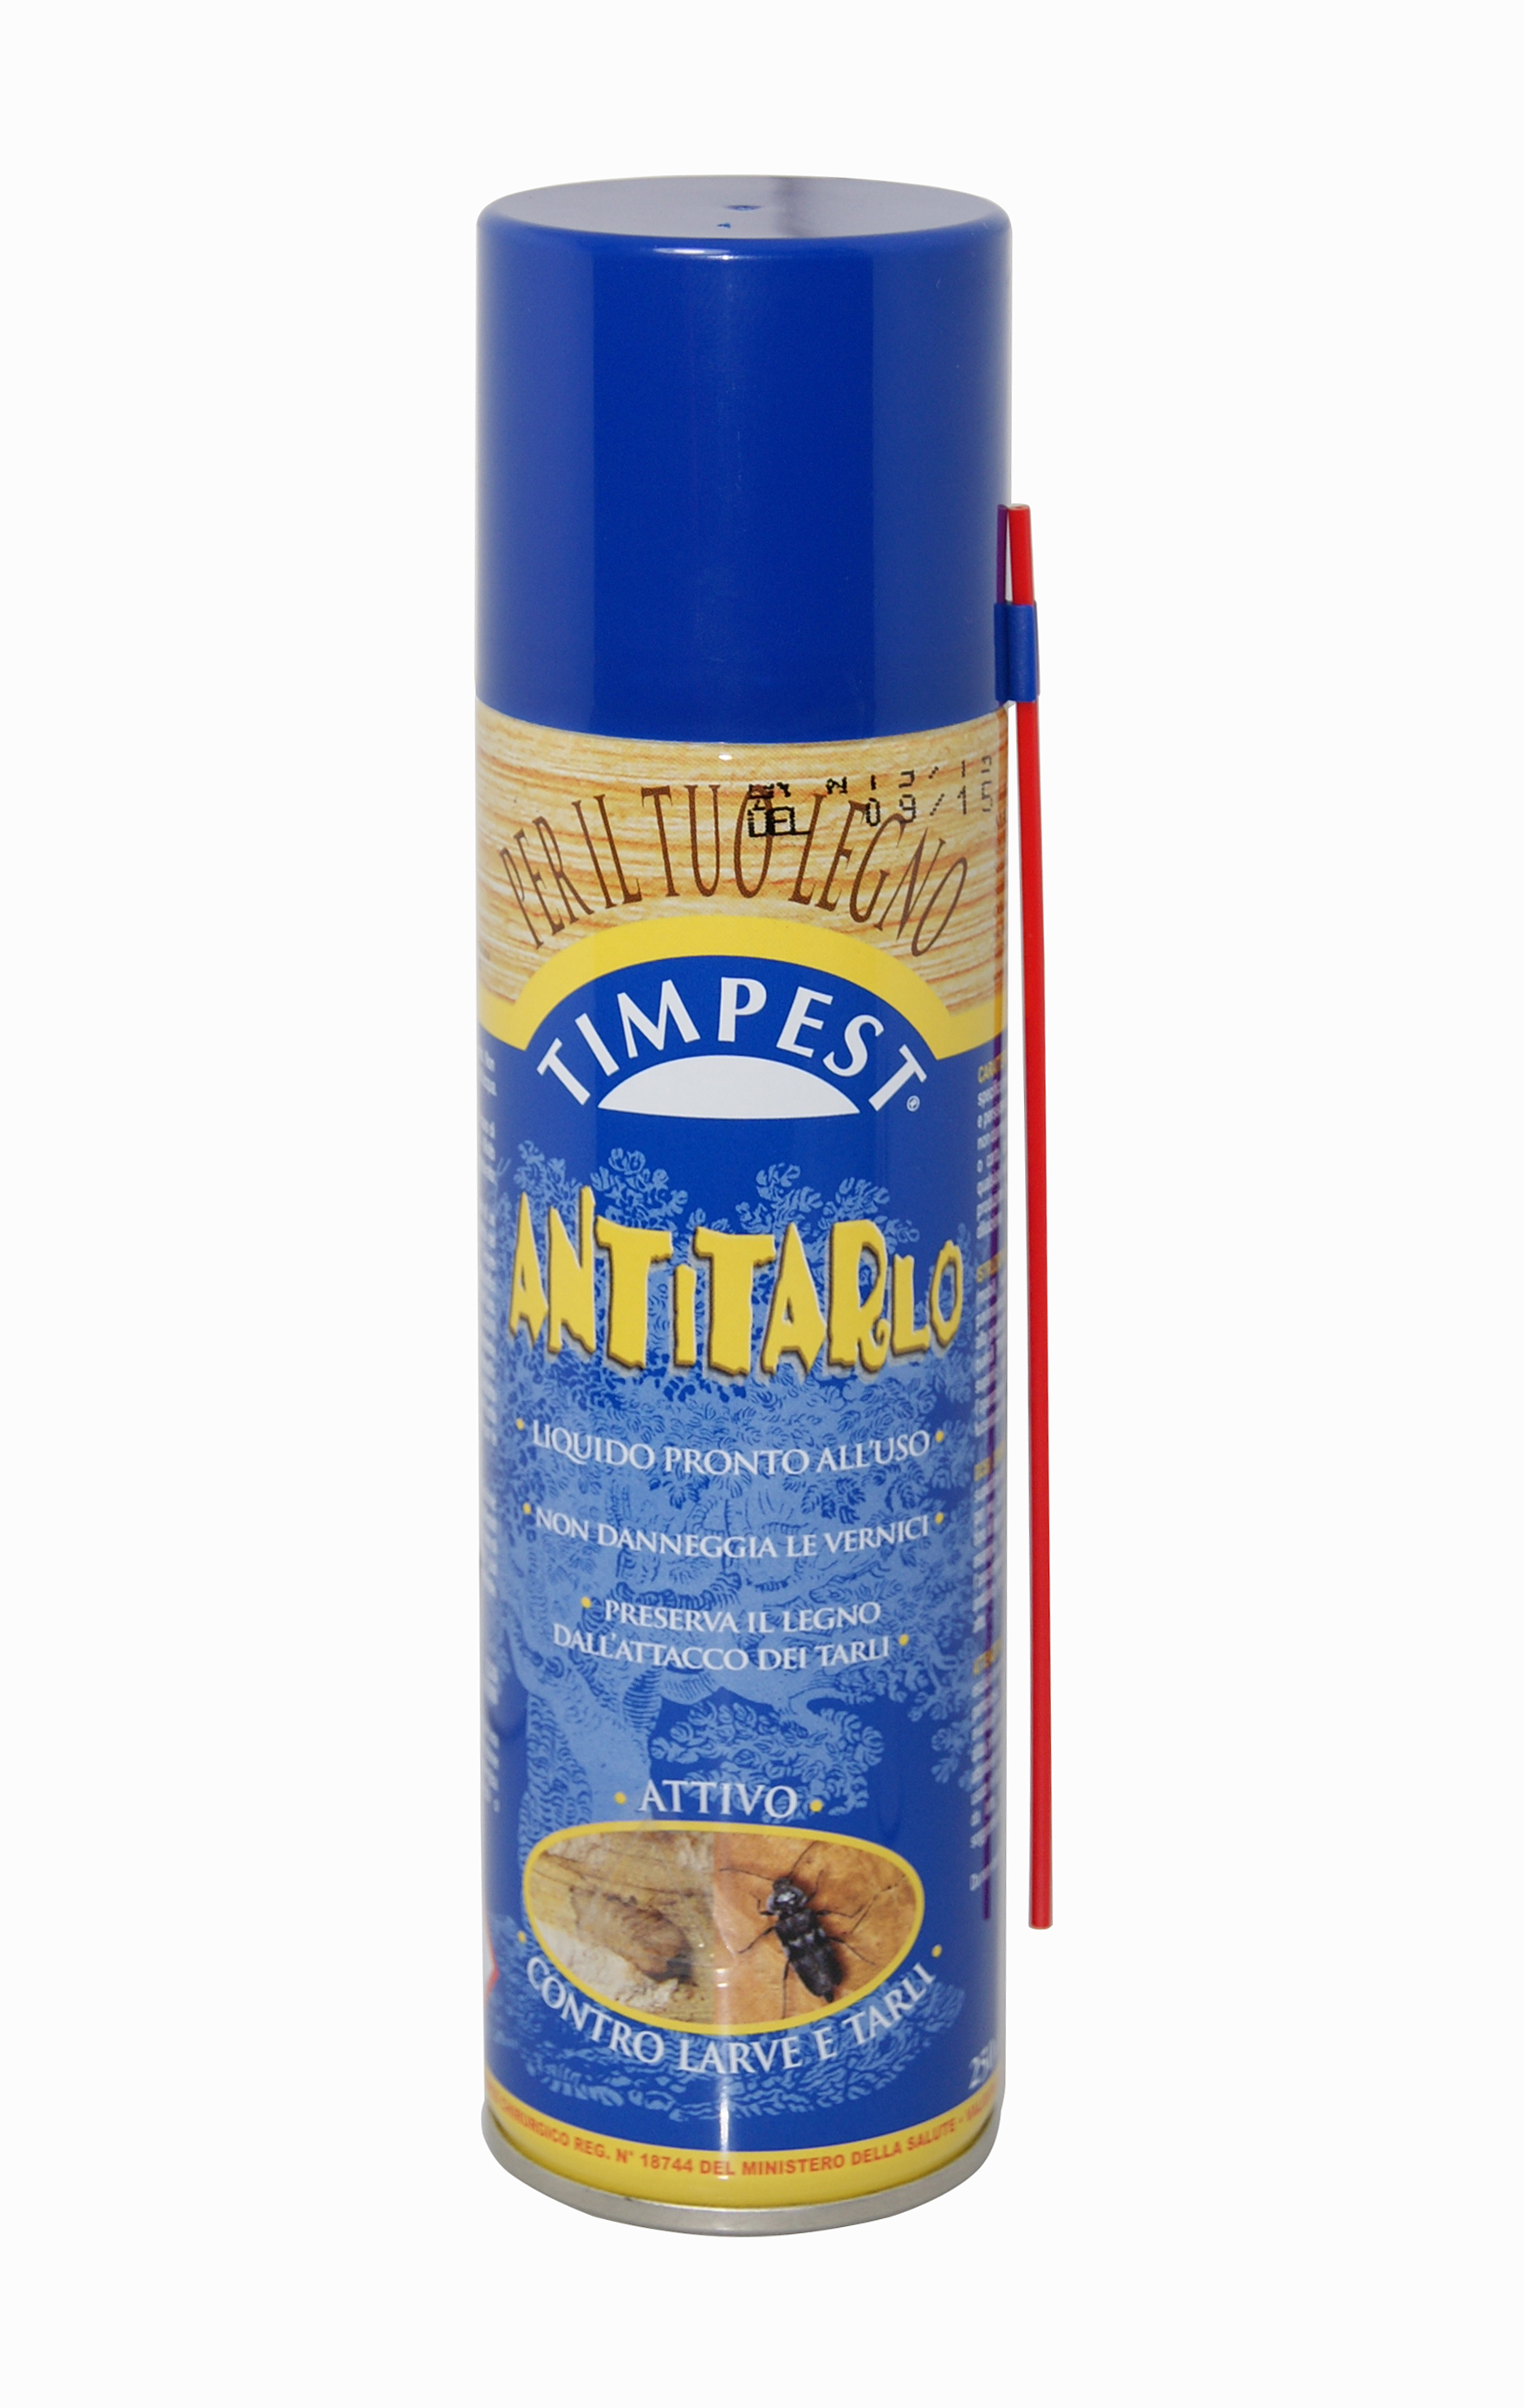 Timpest - antitarlo inodore spray 250 ml